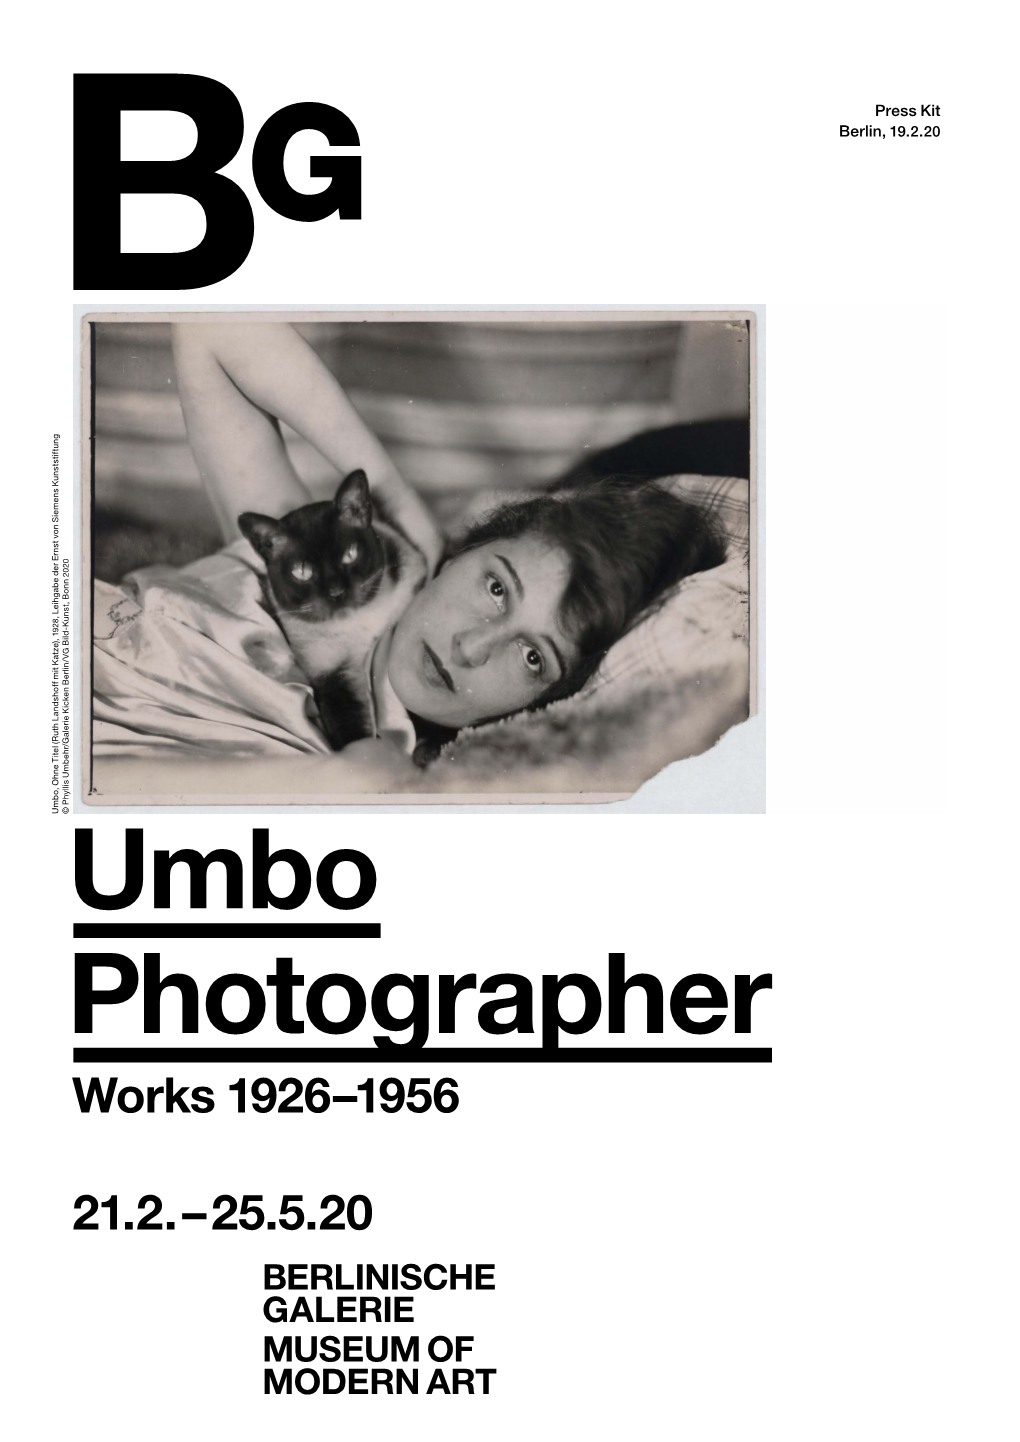 Press Kit Umbo. Photographer 19.2.20